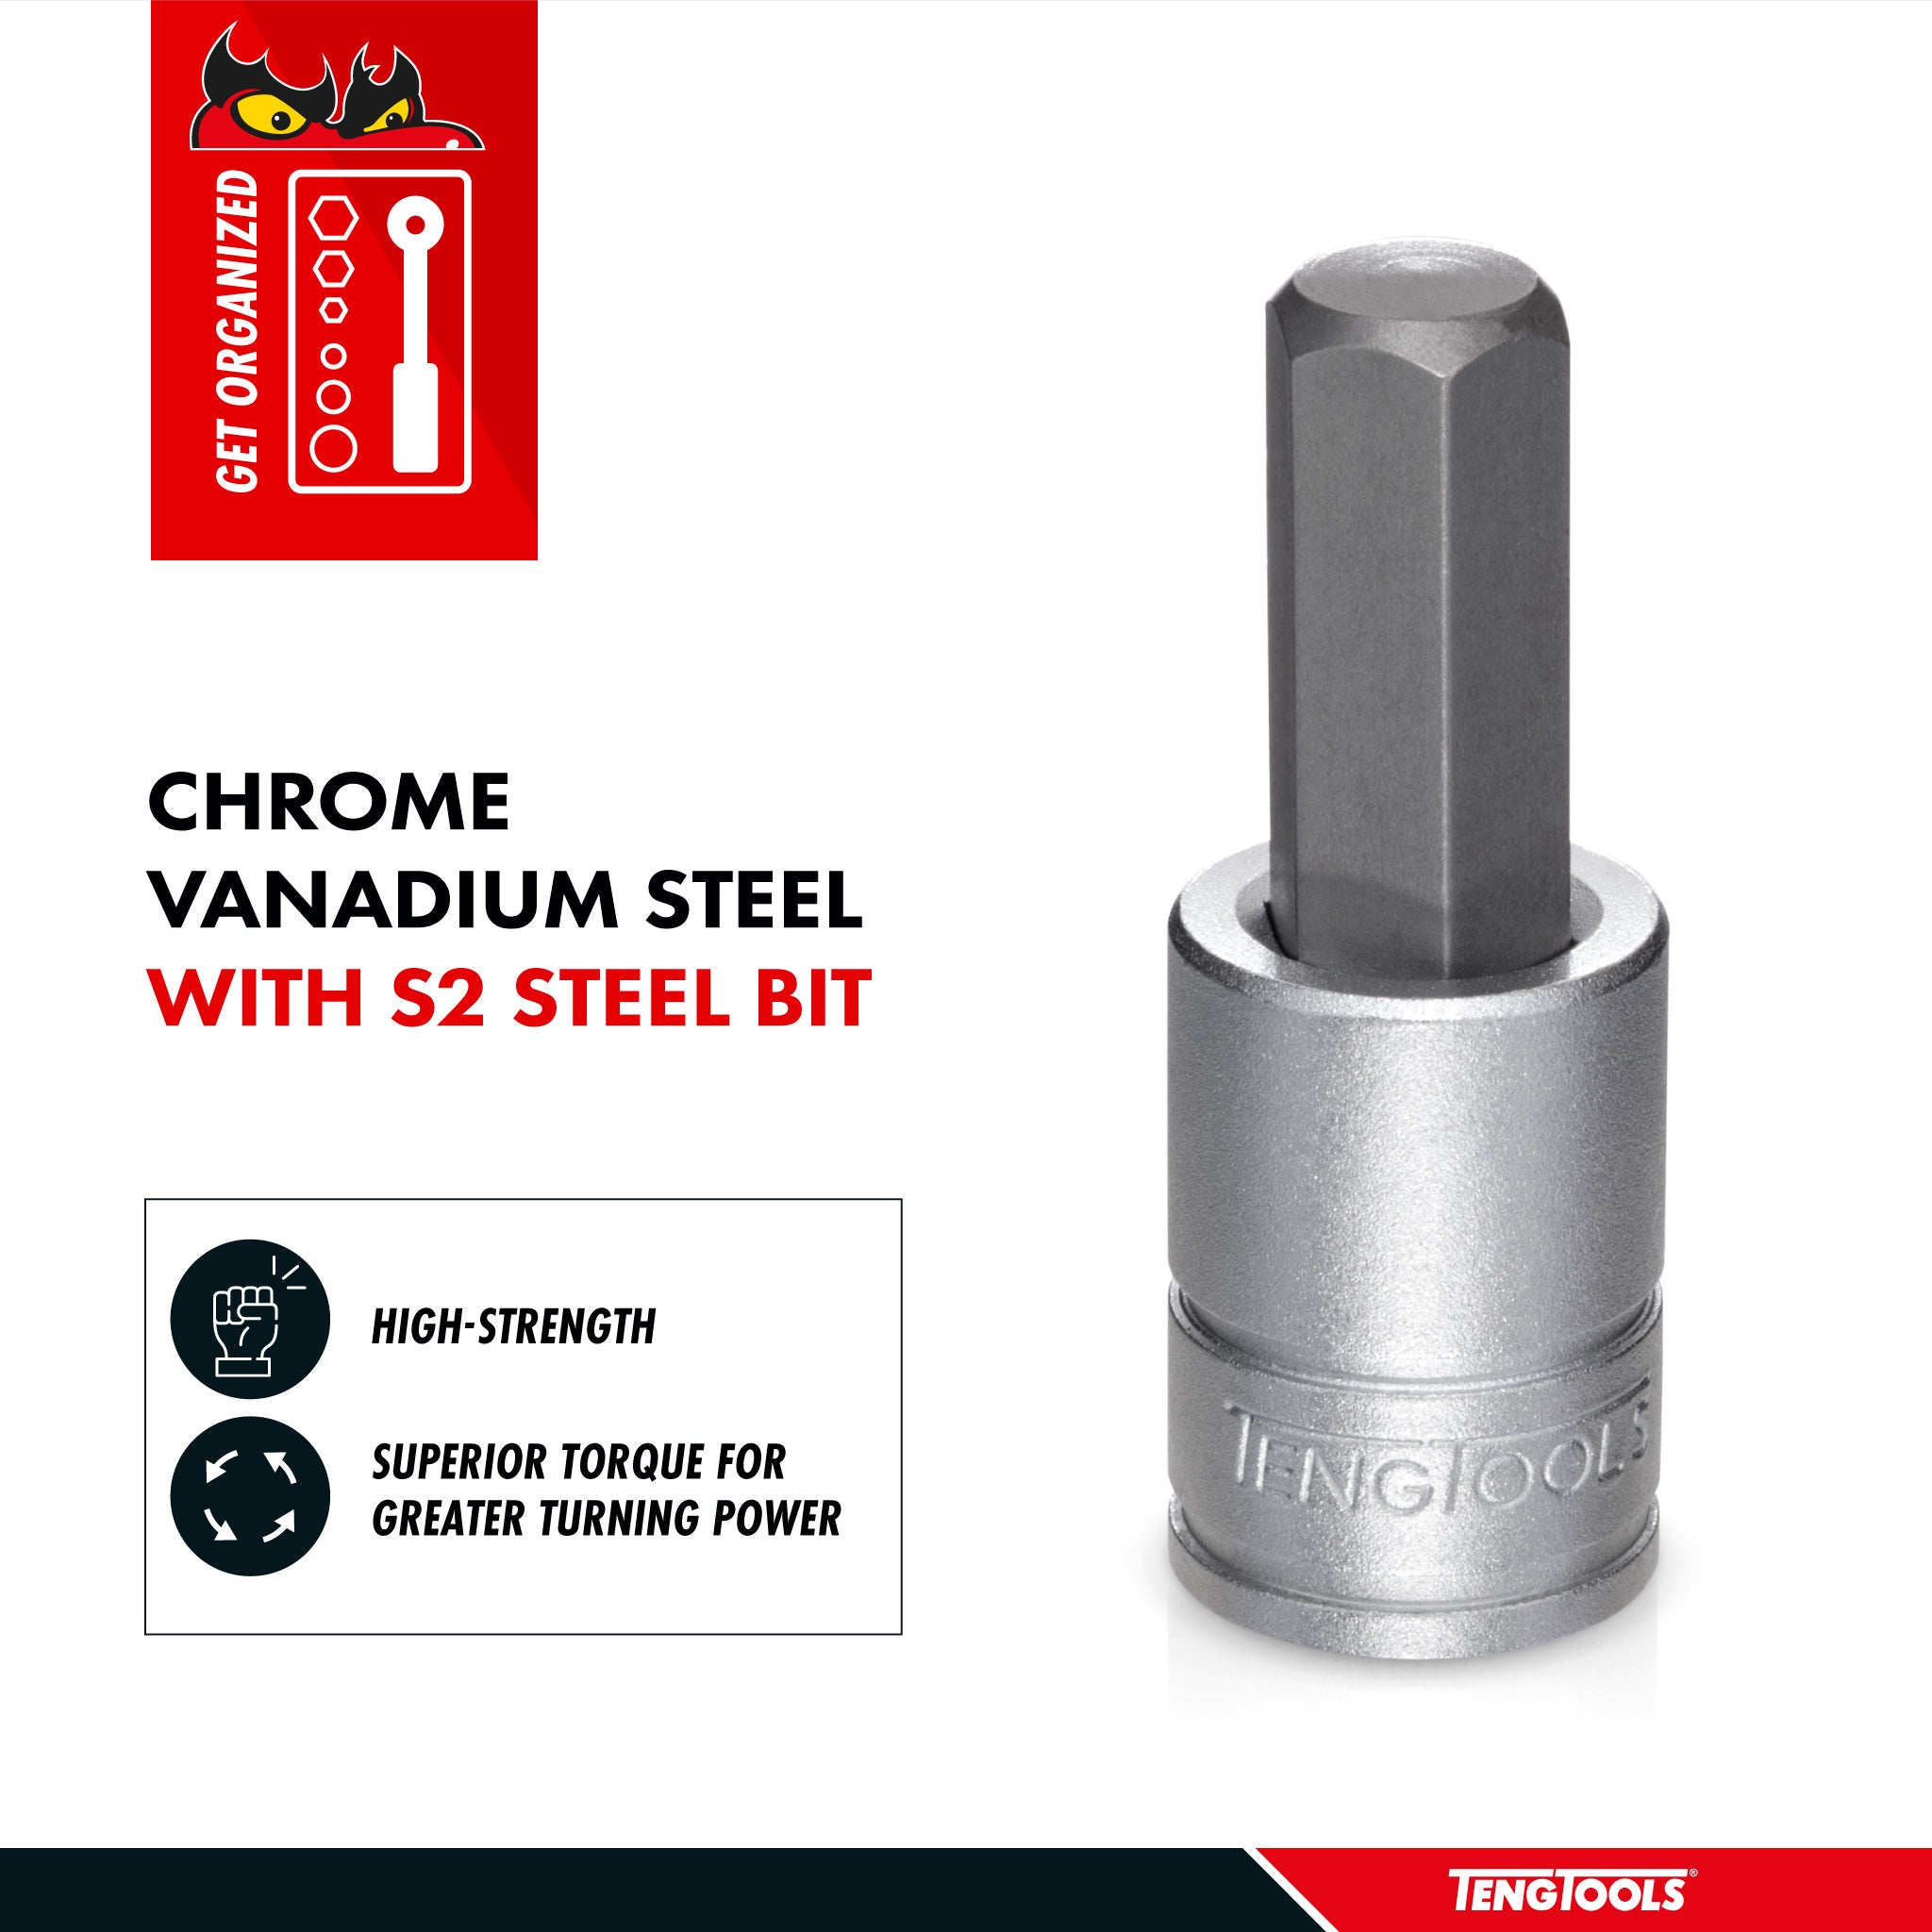 Teng Tools 1/2 Inch Drive Metric Hex Chrome Vanadium Sockets - 5mm